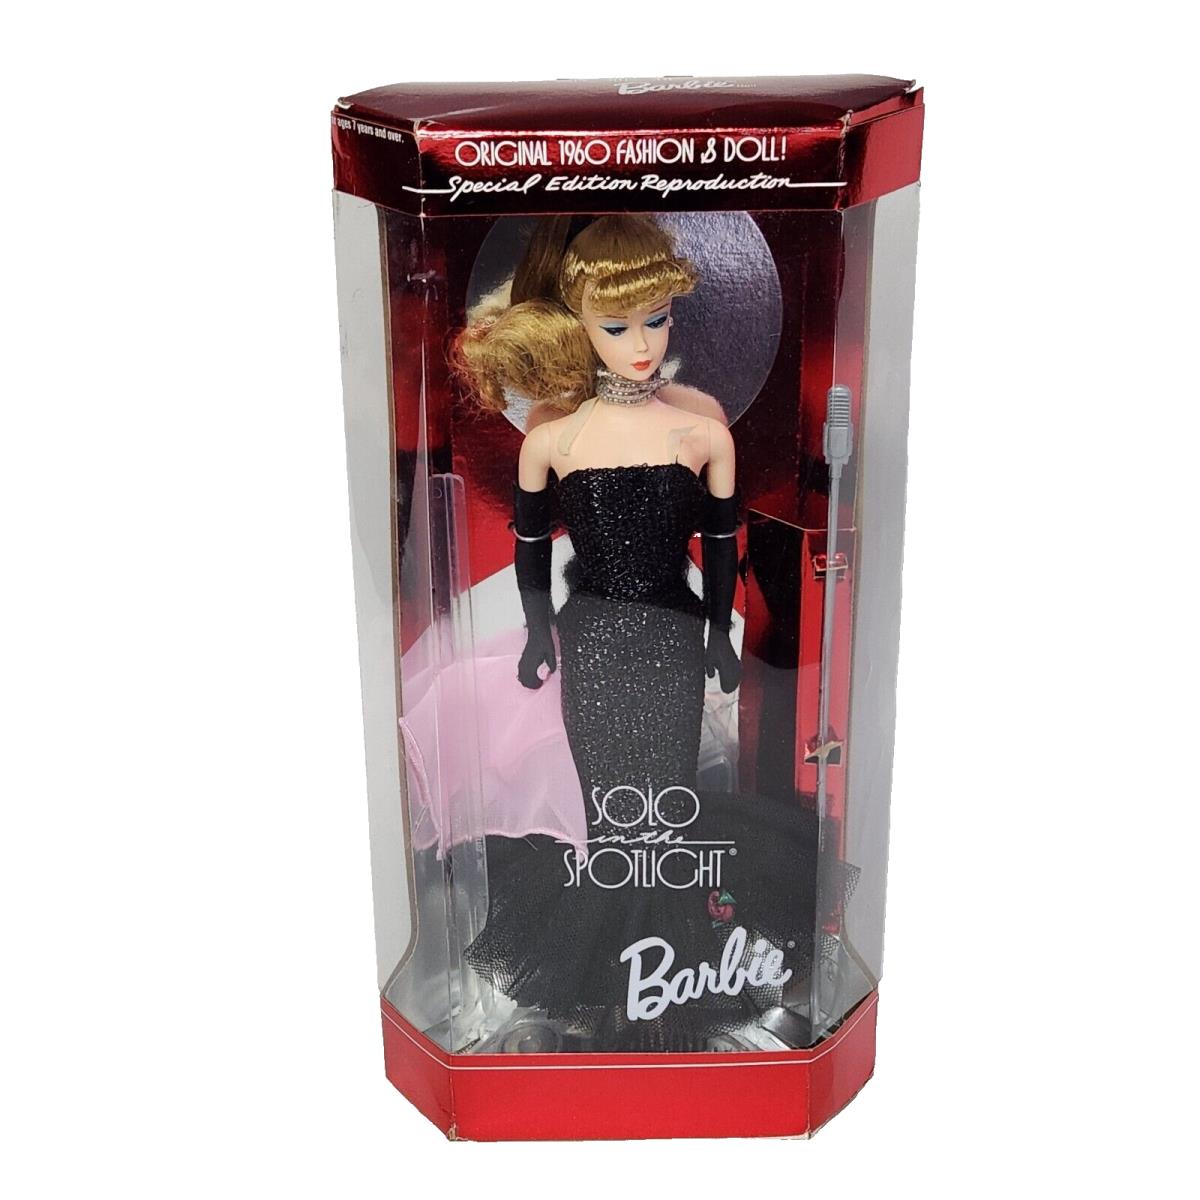 Vintage 1994 Solo IN The Spotlight Barbie Doll Mattel 13534 Repro